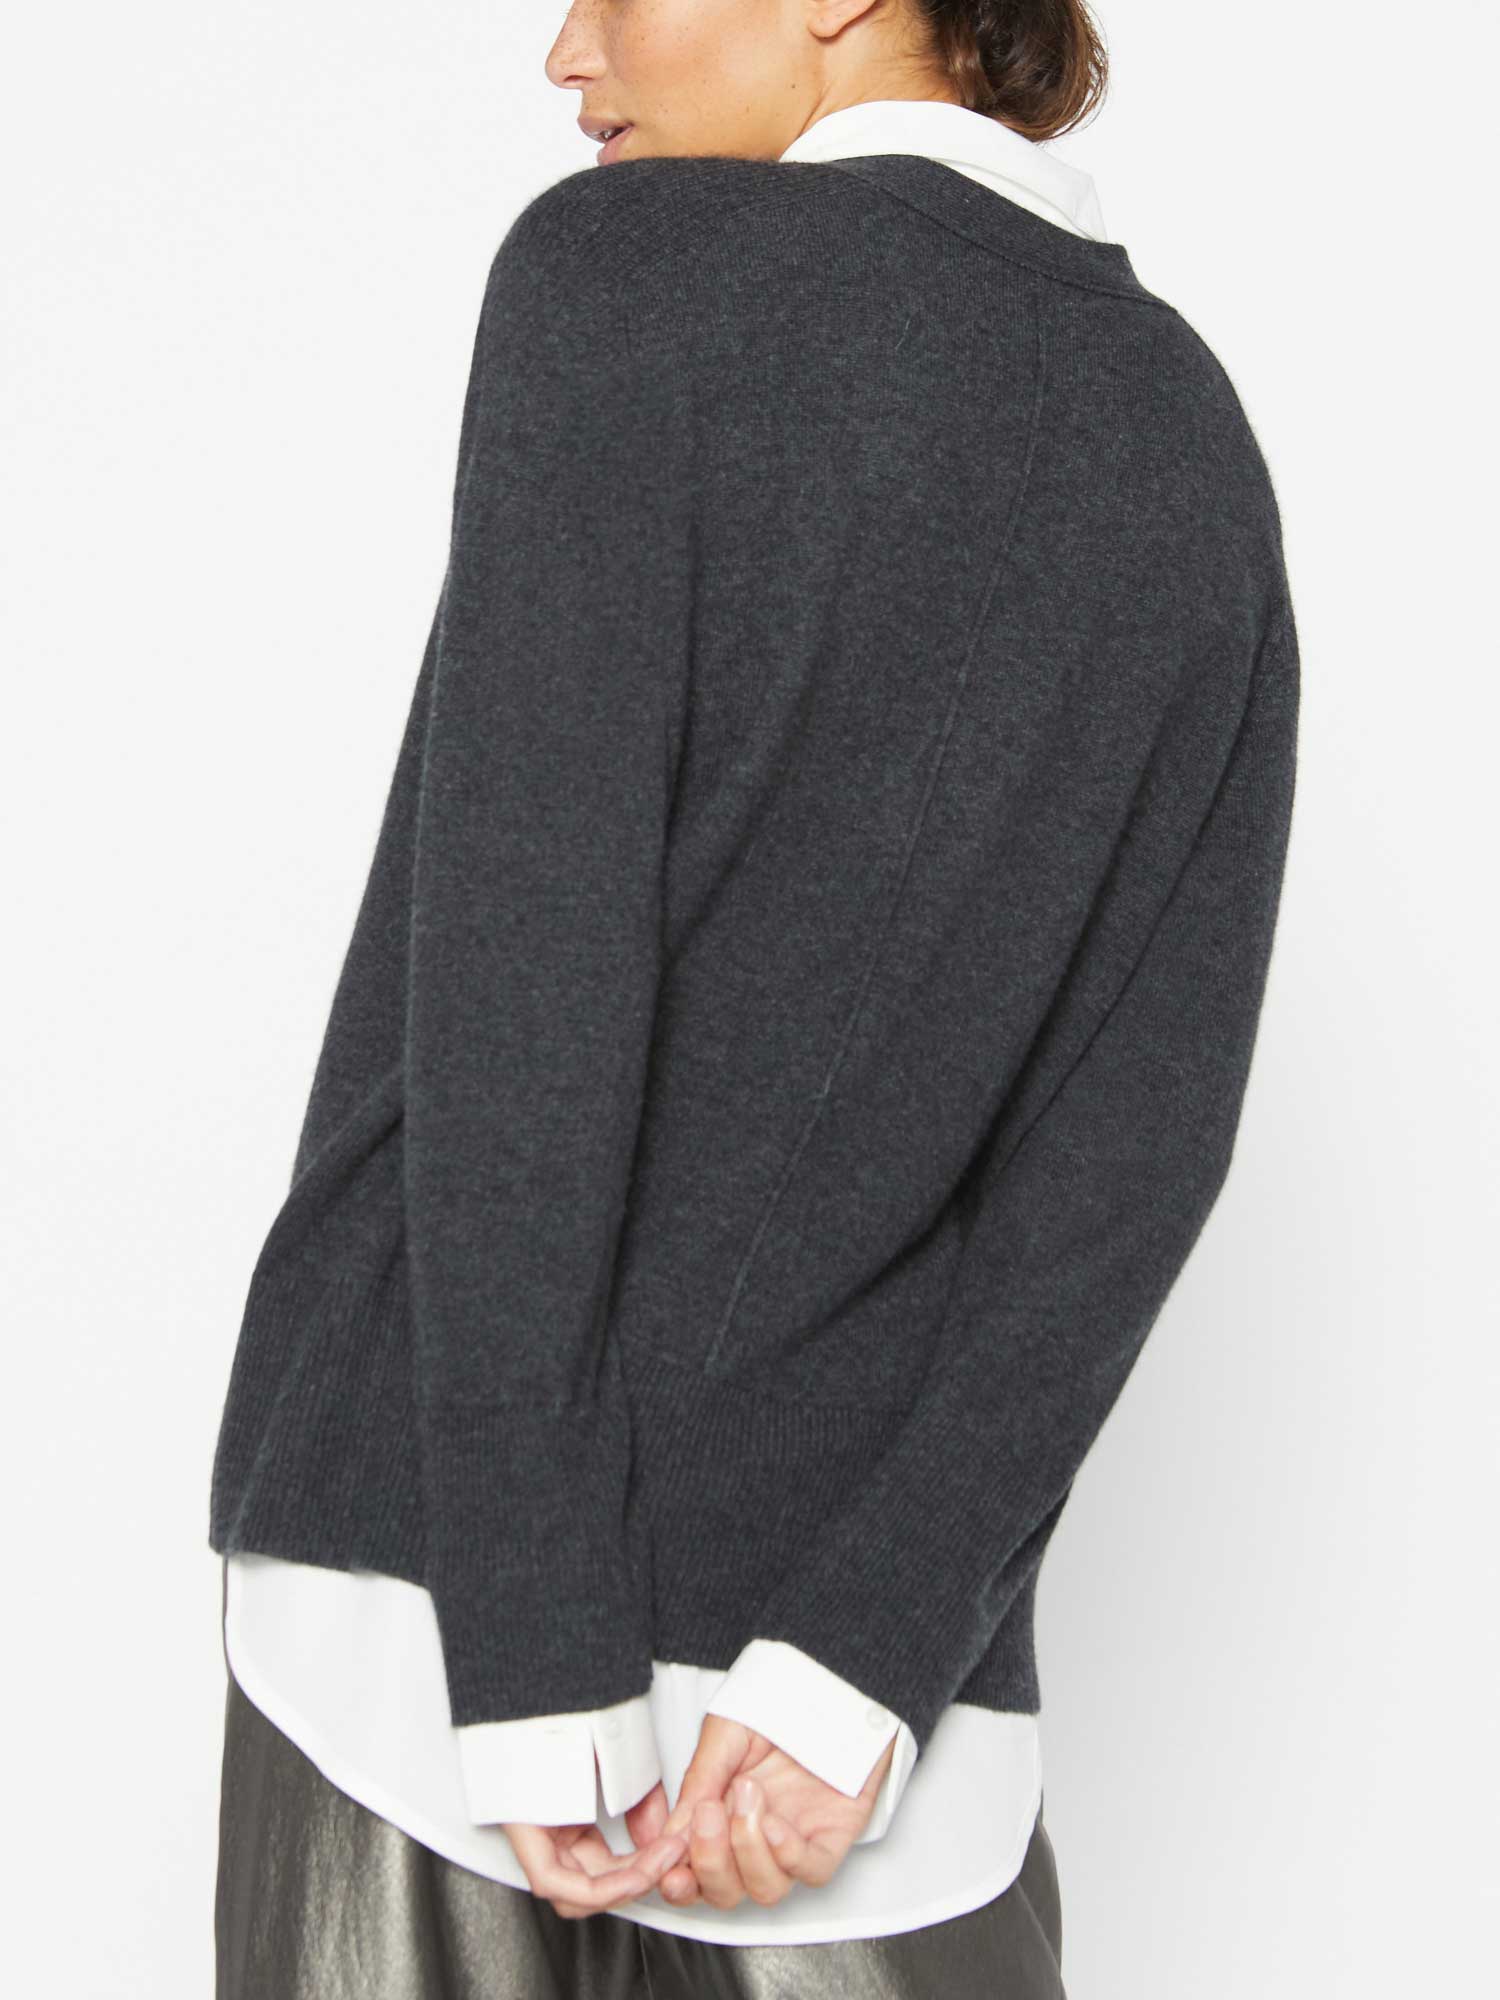 Callie dary dark grey layered cardigan sweater back view